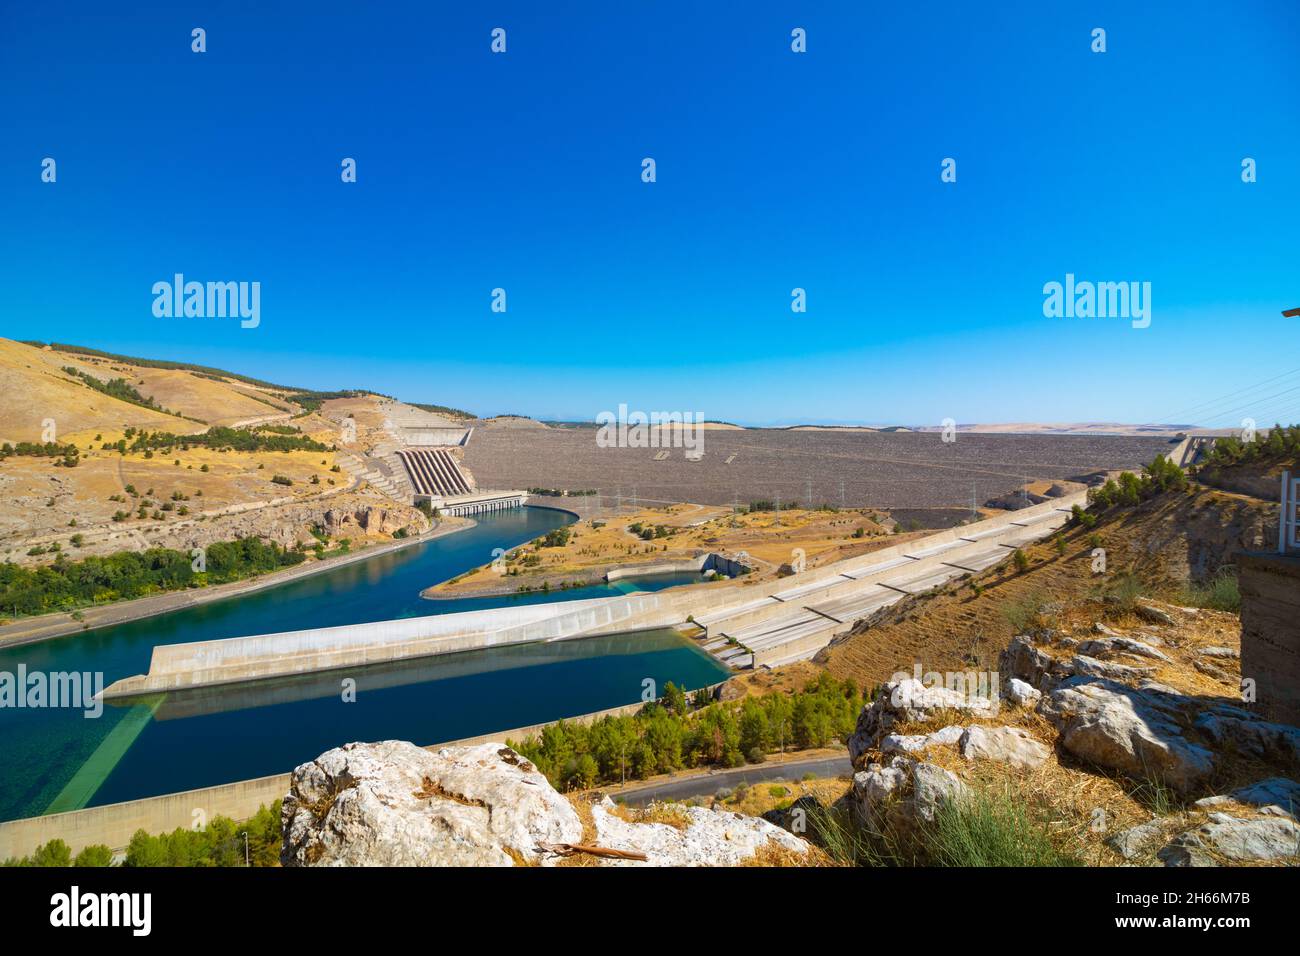 Ataturk dam hi-res stock photography and images - Alamy